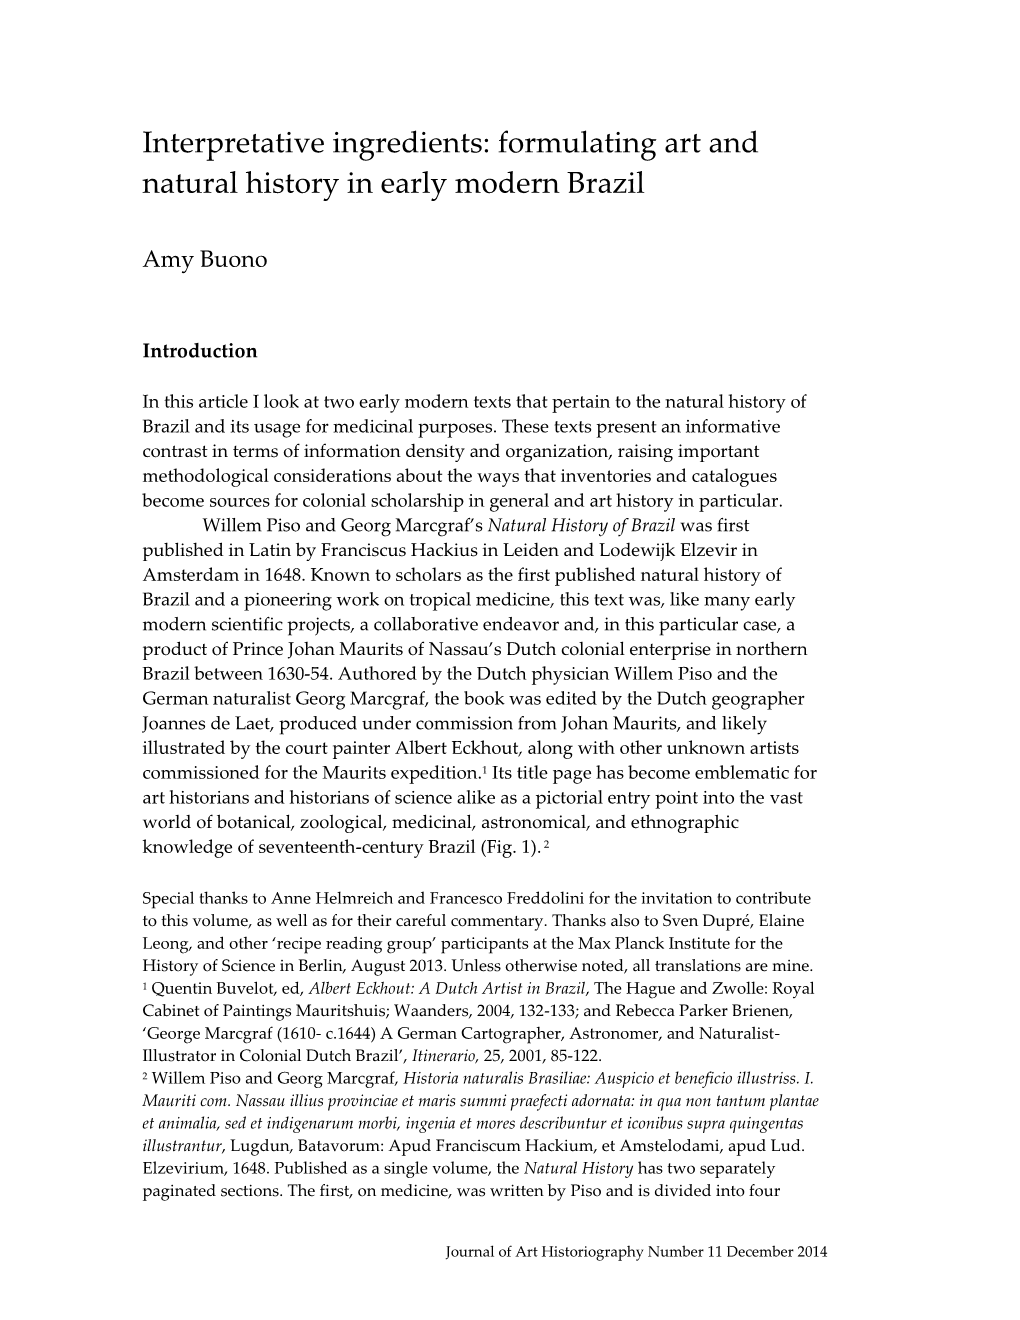 Interpretative Ingredients: Formulating Art and Natural History in Early Modern Brazil